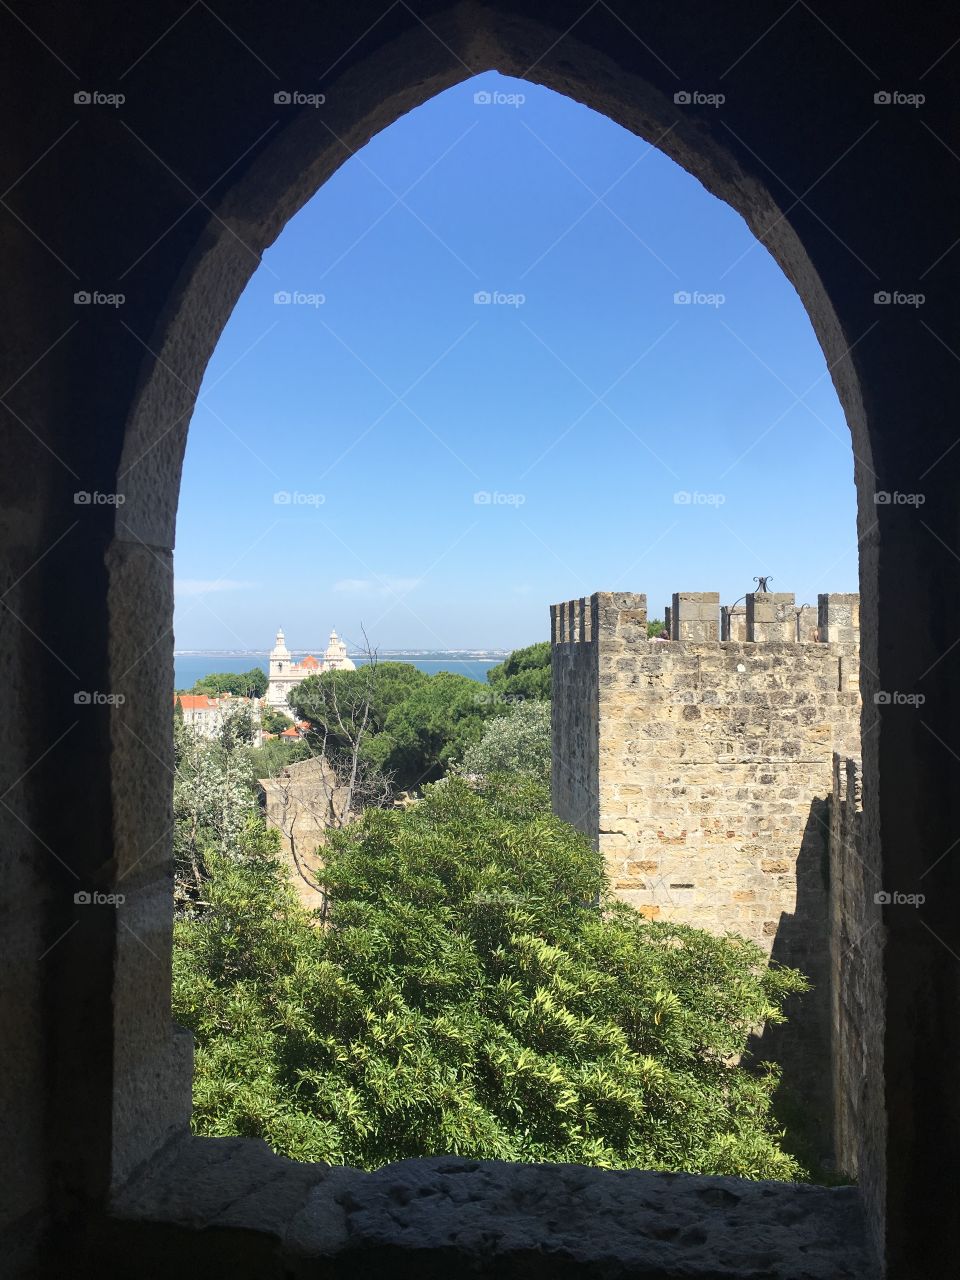 Through a castle window